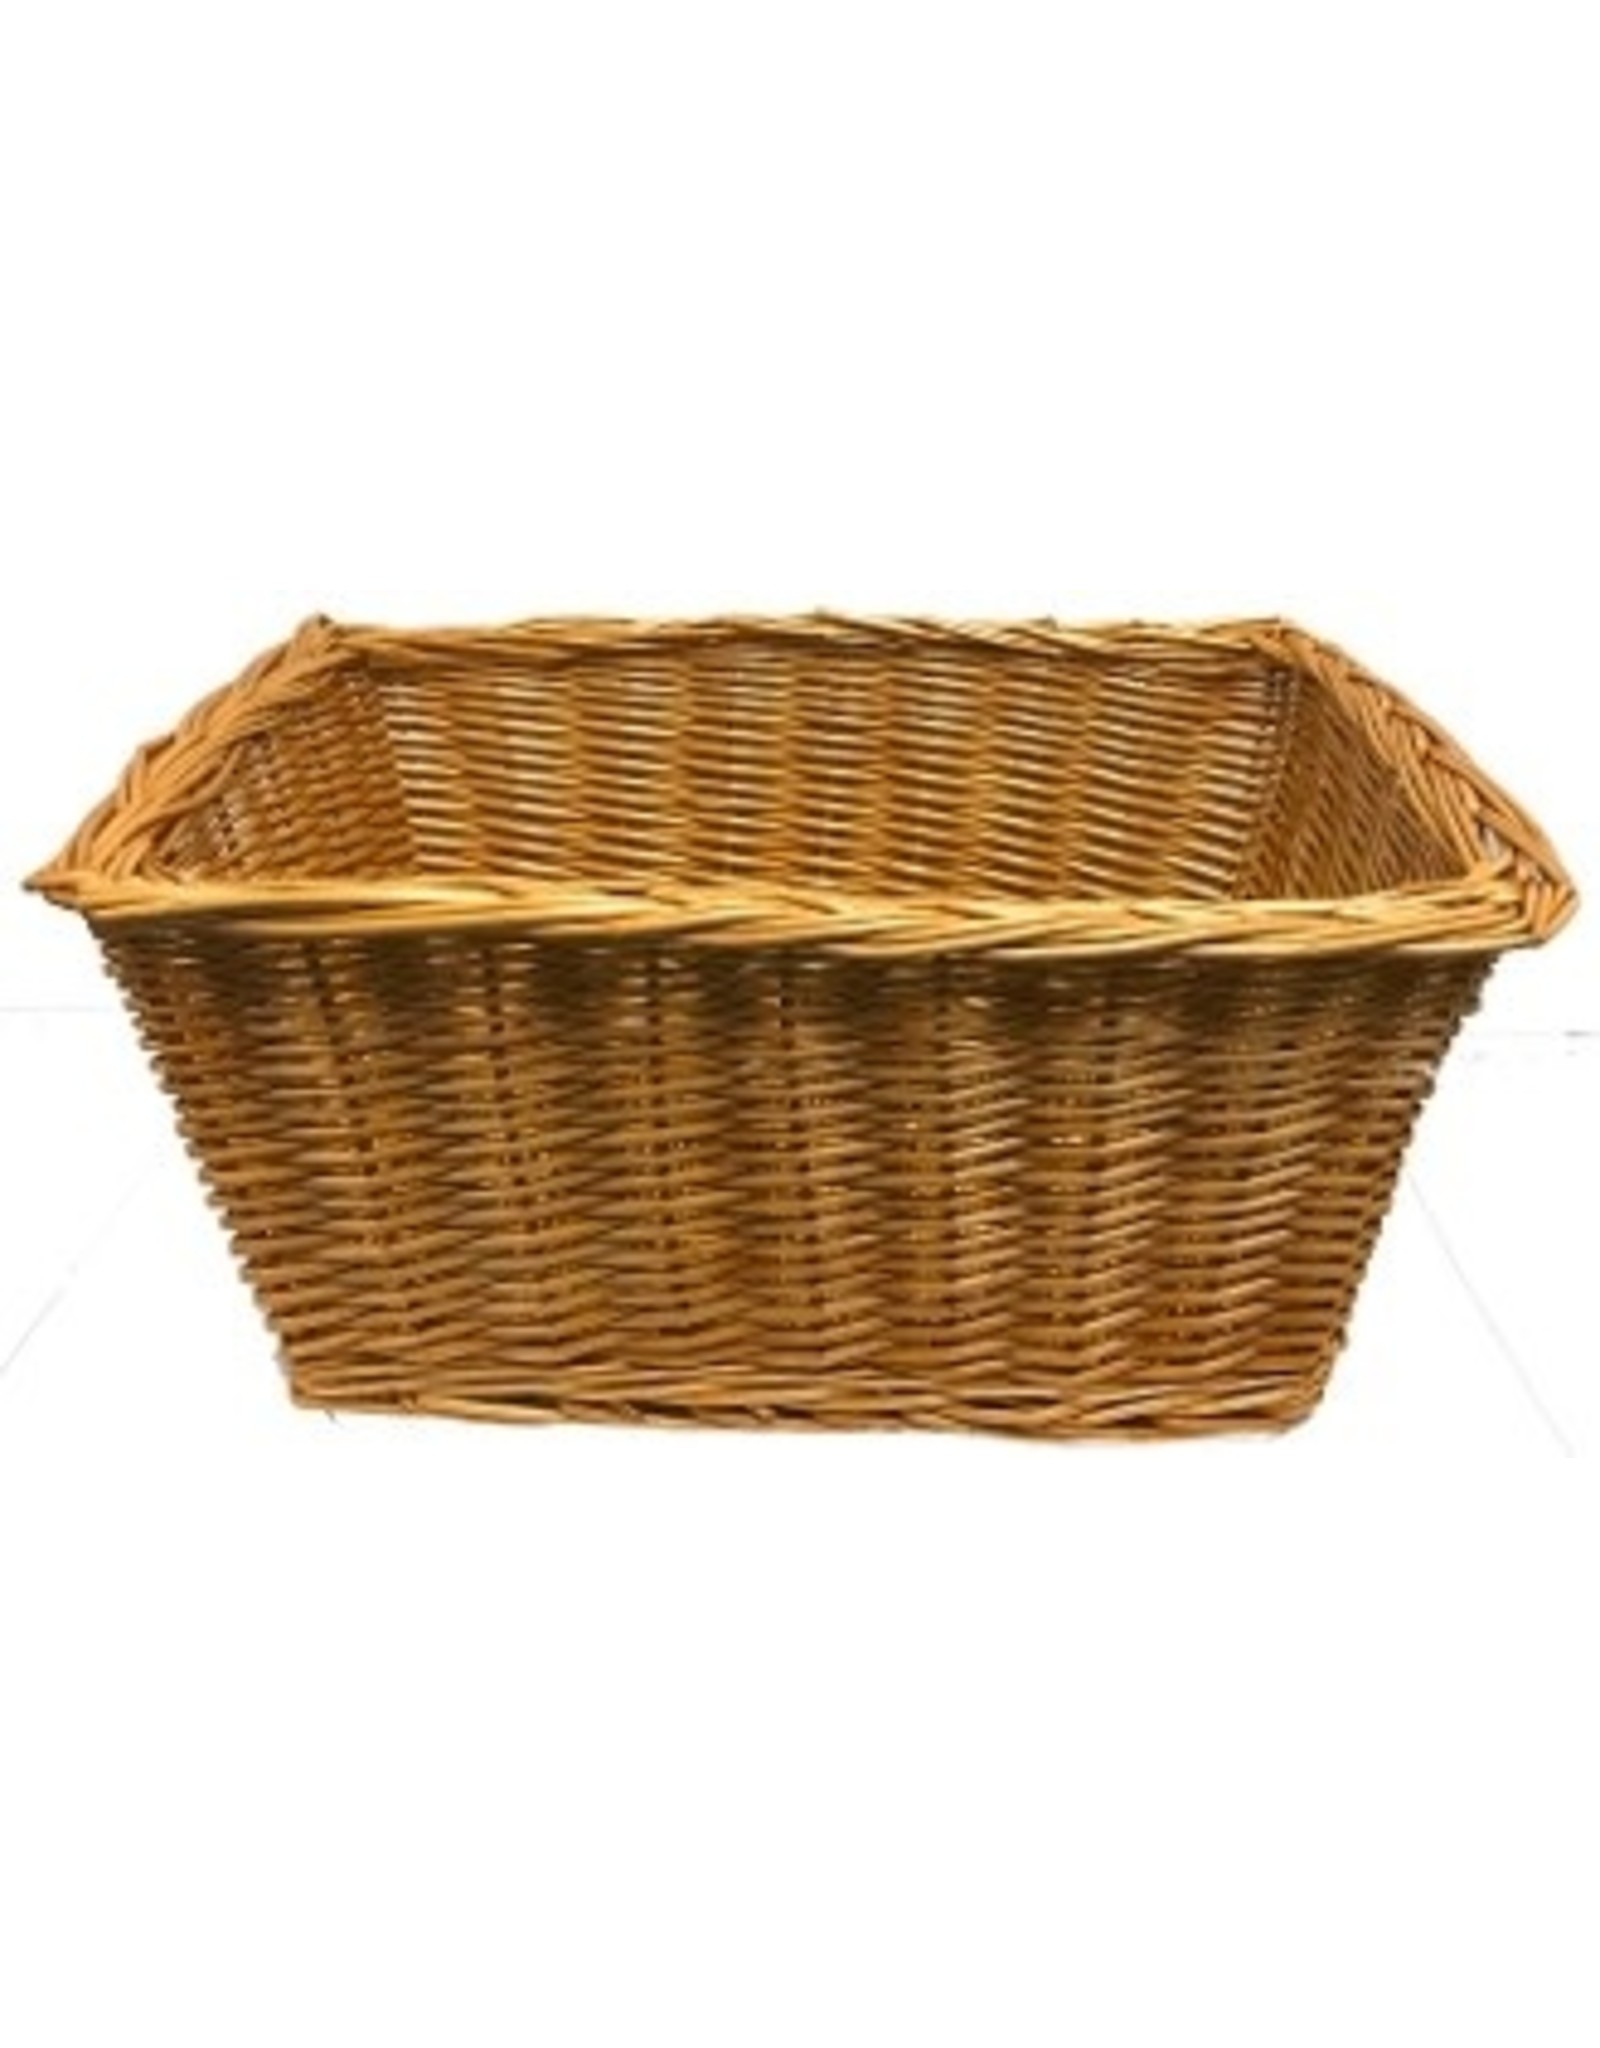 Remey, F.J. Rectangular Collection Basket 9"x13", 4" Deep